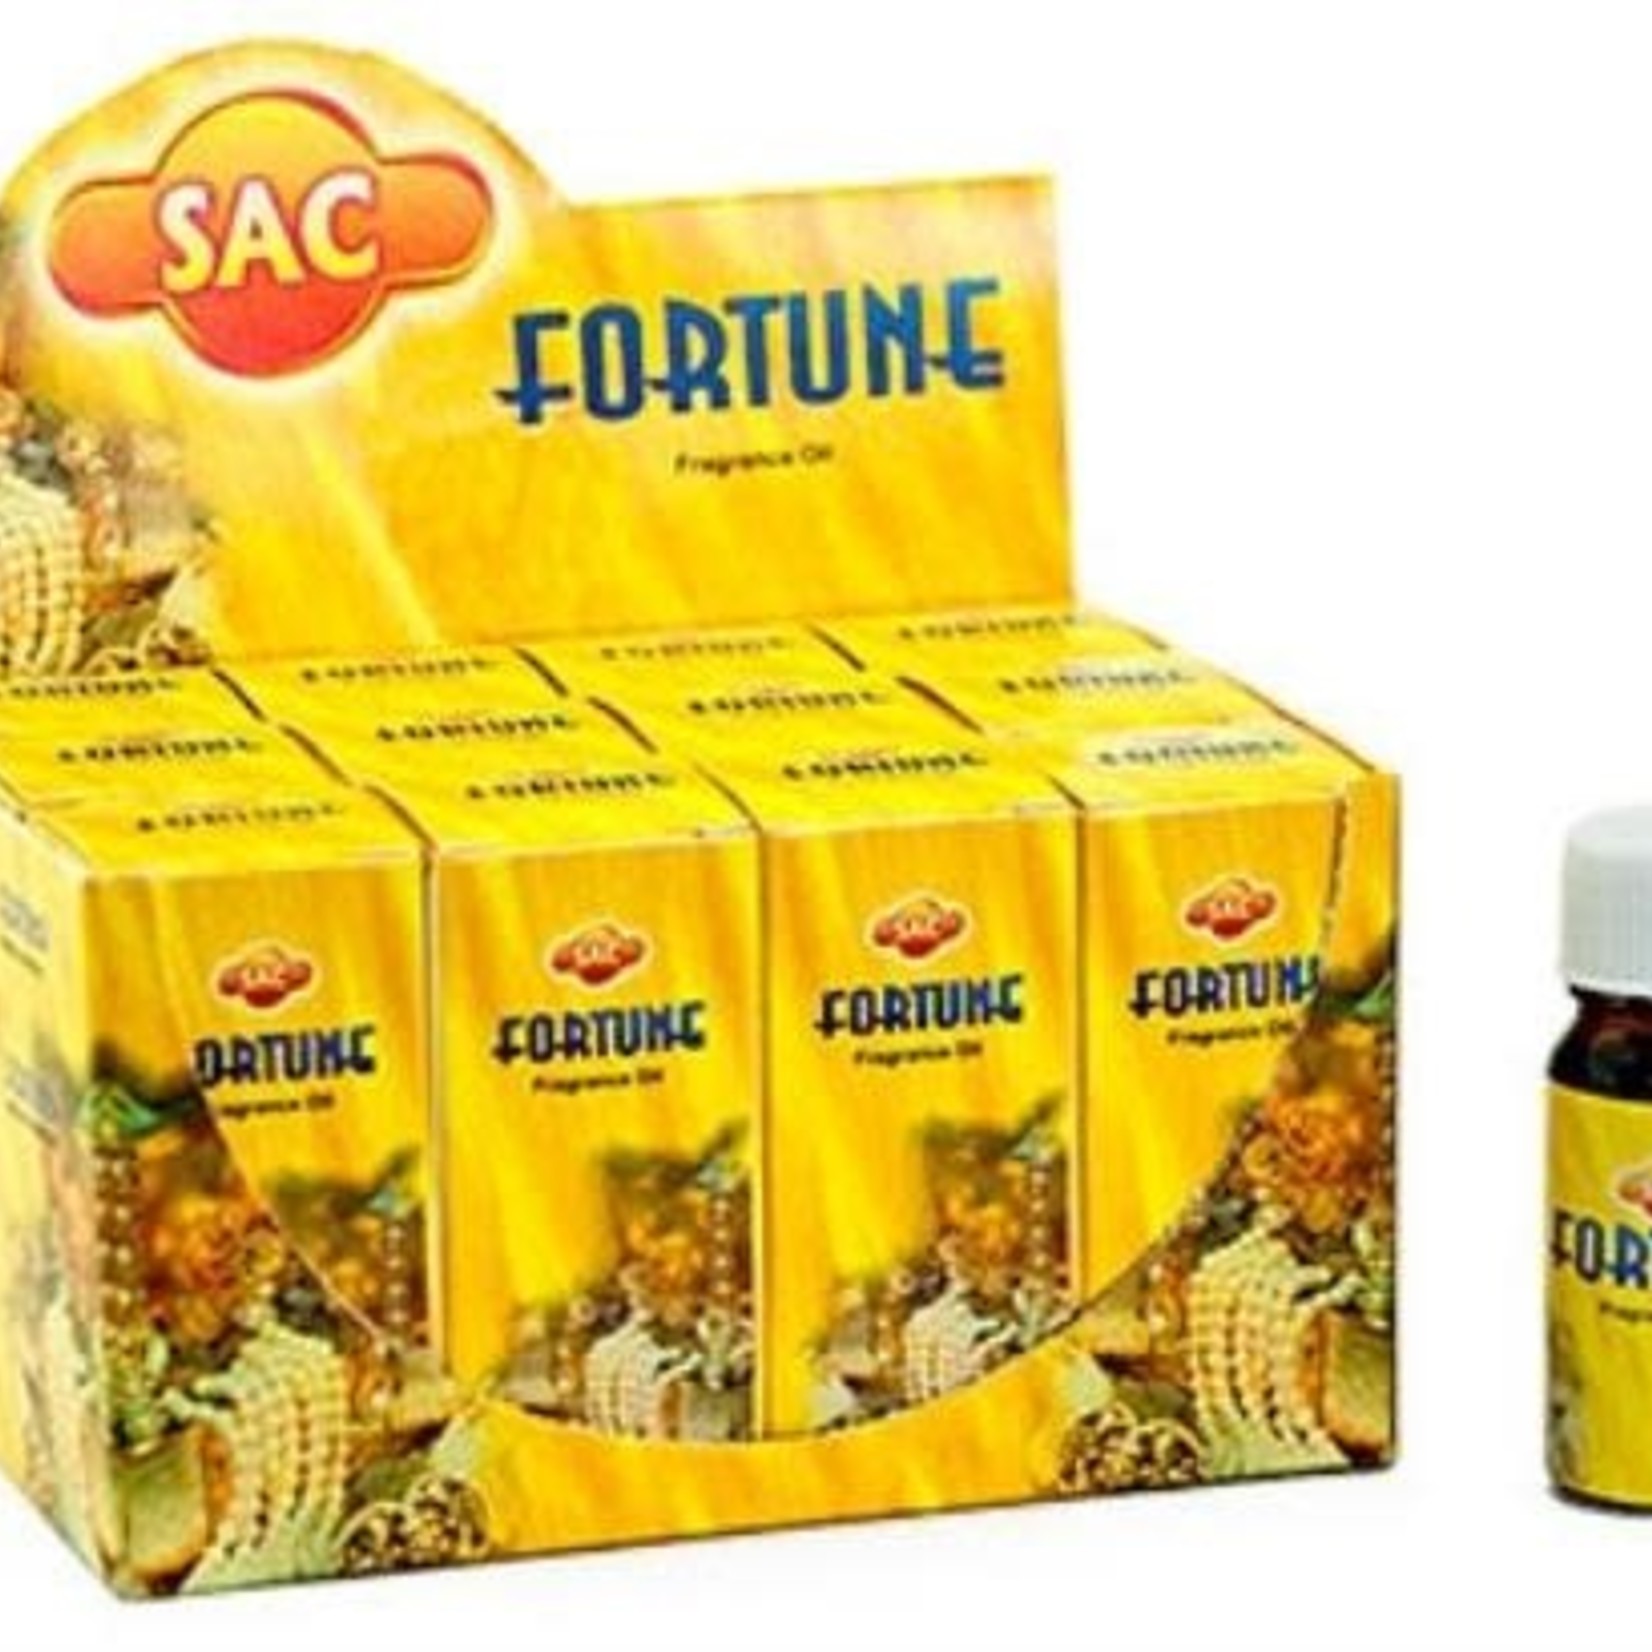 SAC Fortune Fragrance Oil - SAC